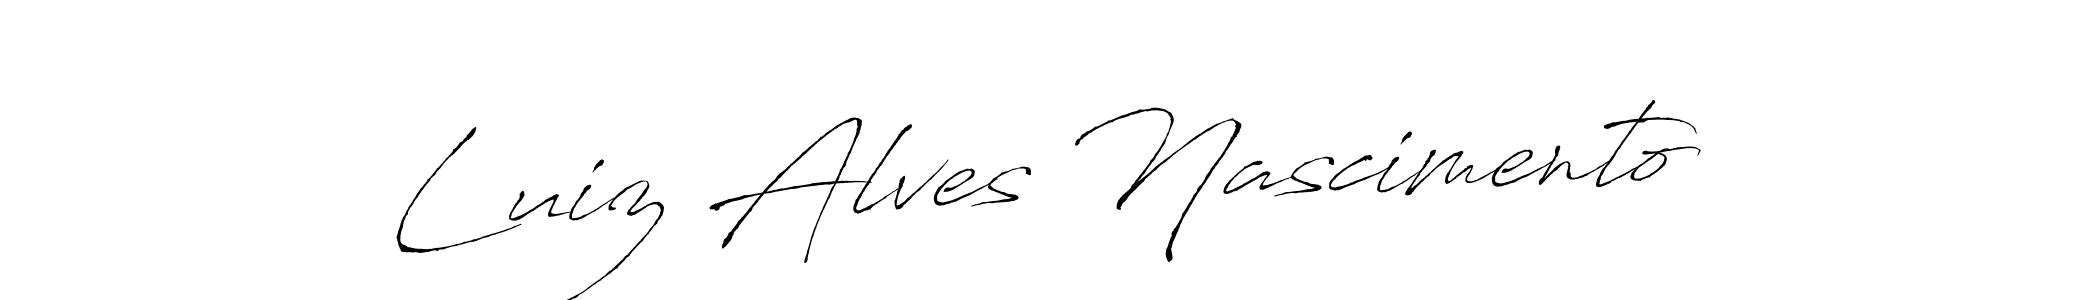 How to Draw Luiz Alves Nascimento signature style? Antro_Vectra is a latest design signature styles for name Luiz Alves Nascimento. Luiz Alves Nascimento signature style 6 images and pictures png